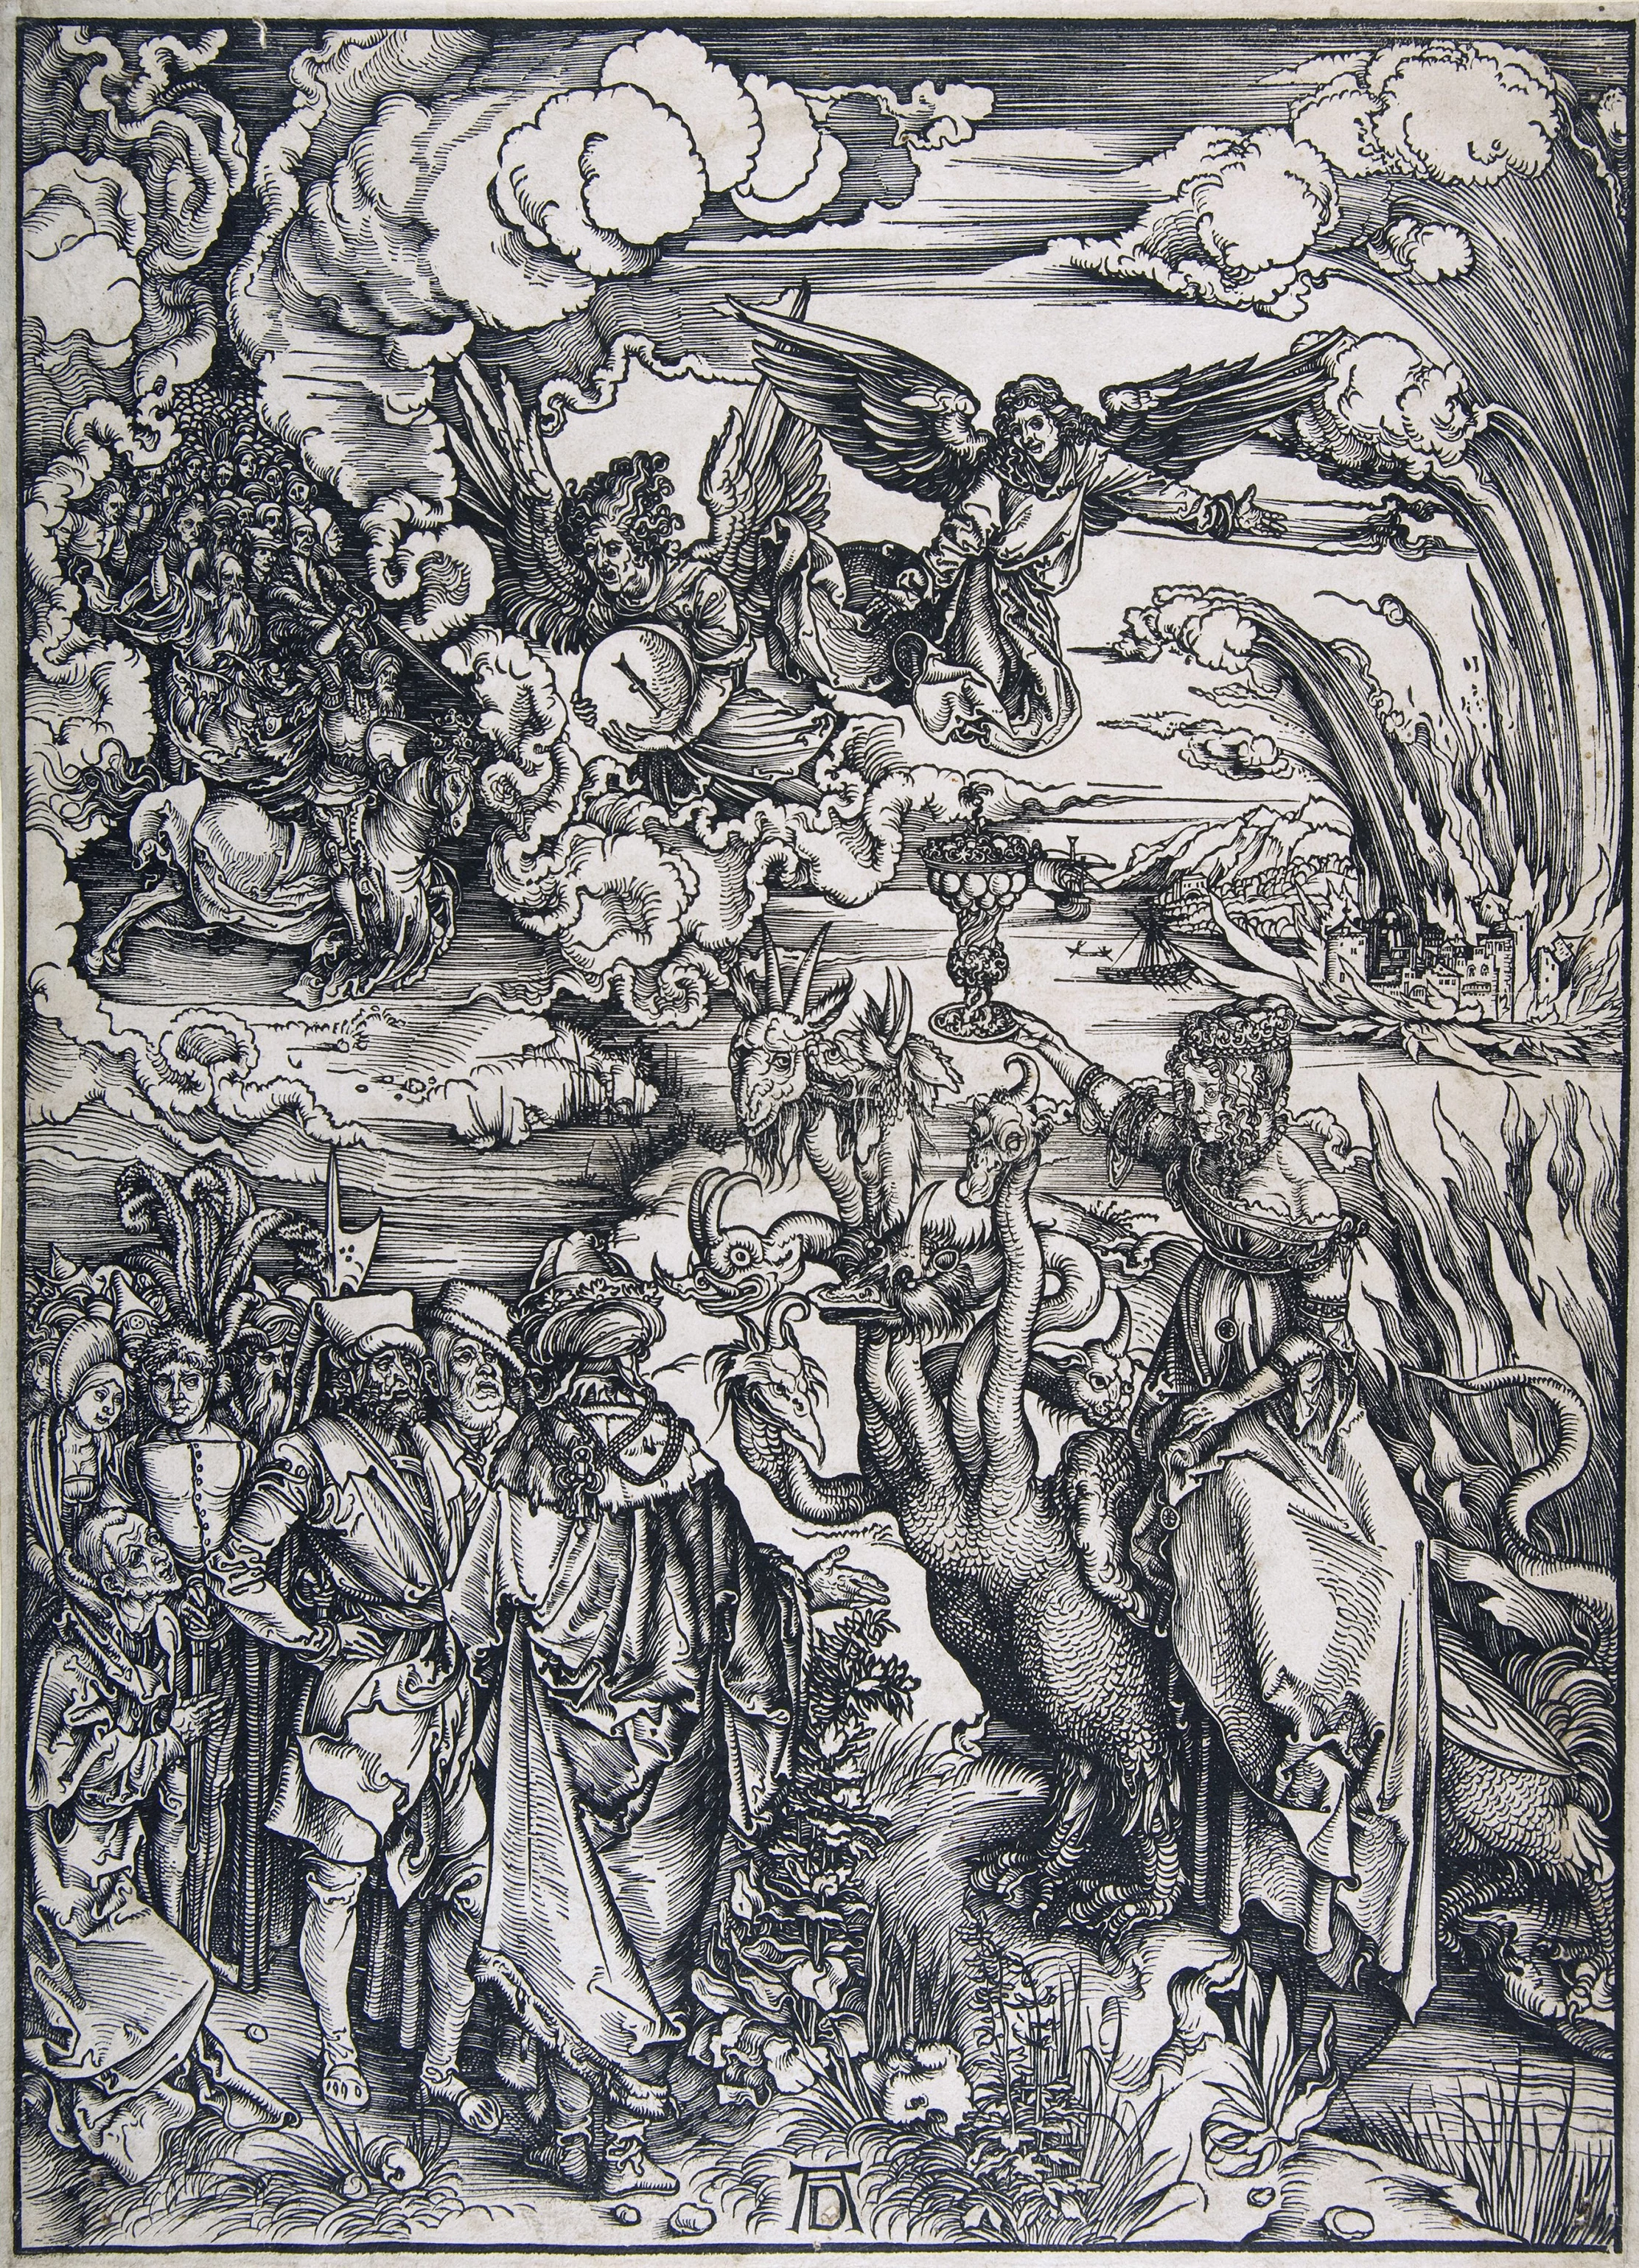 The Apocalypse — The Whore of Babylon, Albrecht Dürer